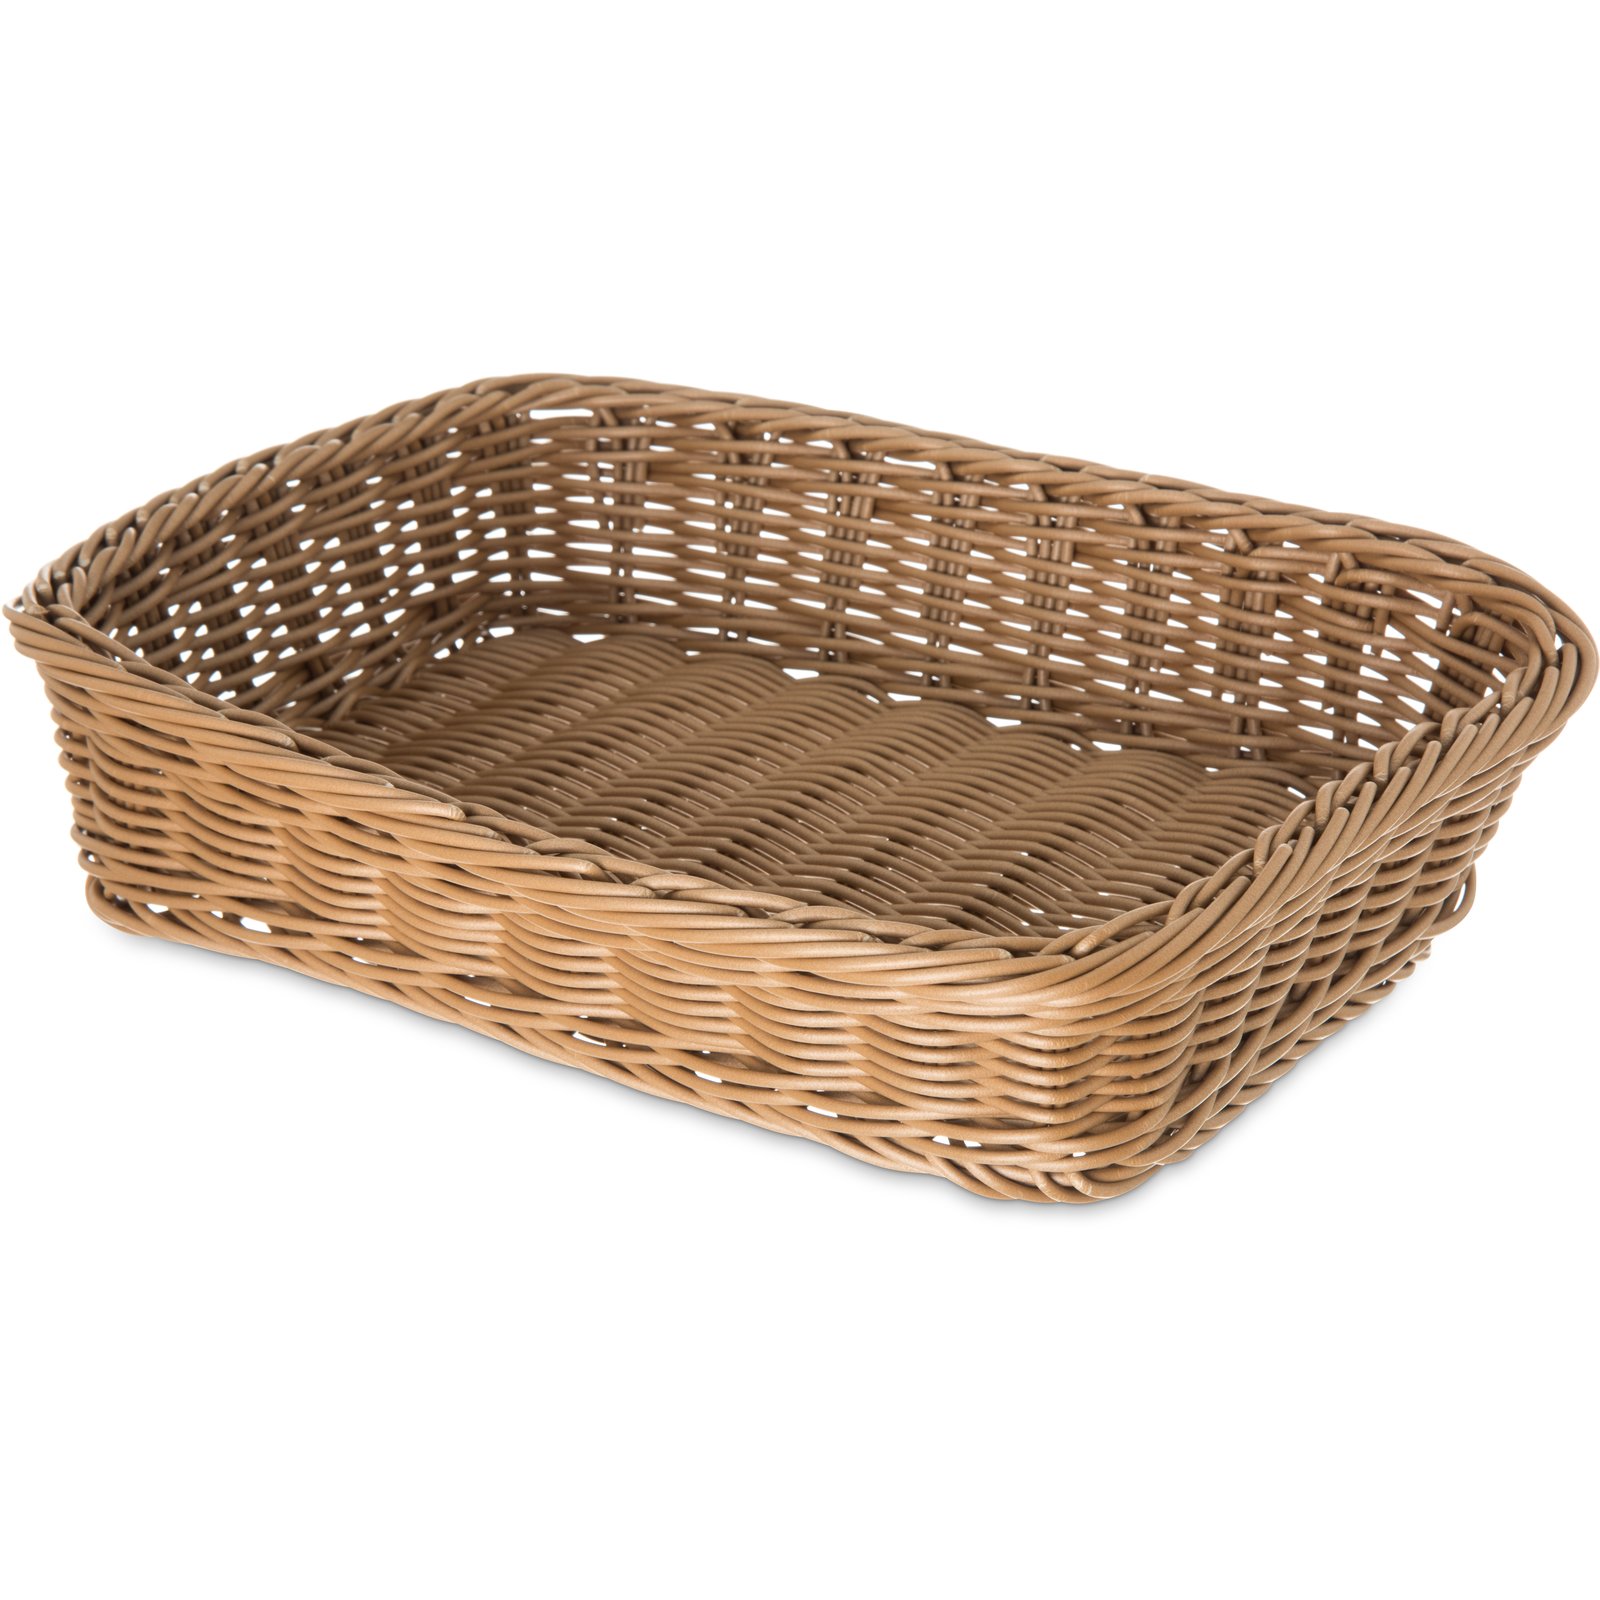 655225 - Woven Baskets Rectangular Basket 11.5" - Tan ...
